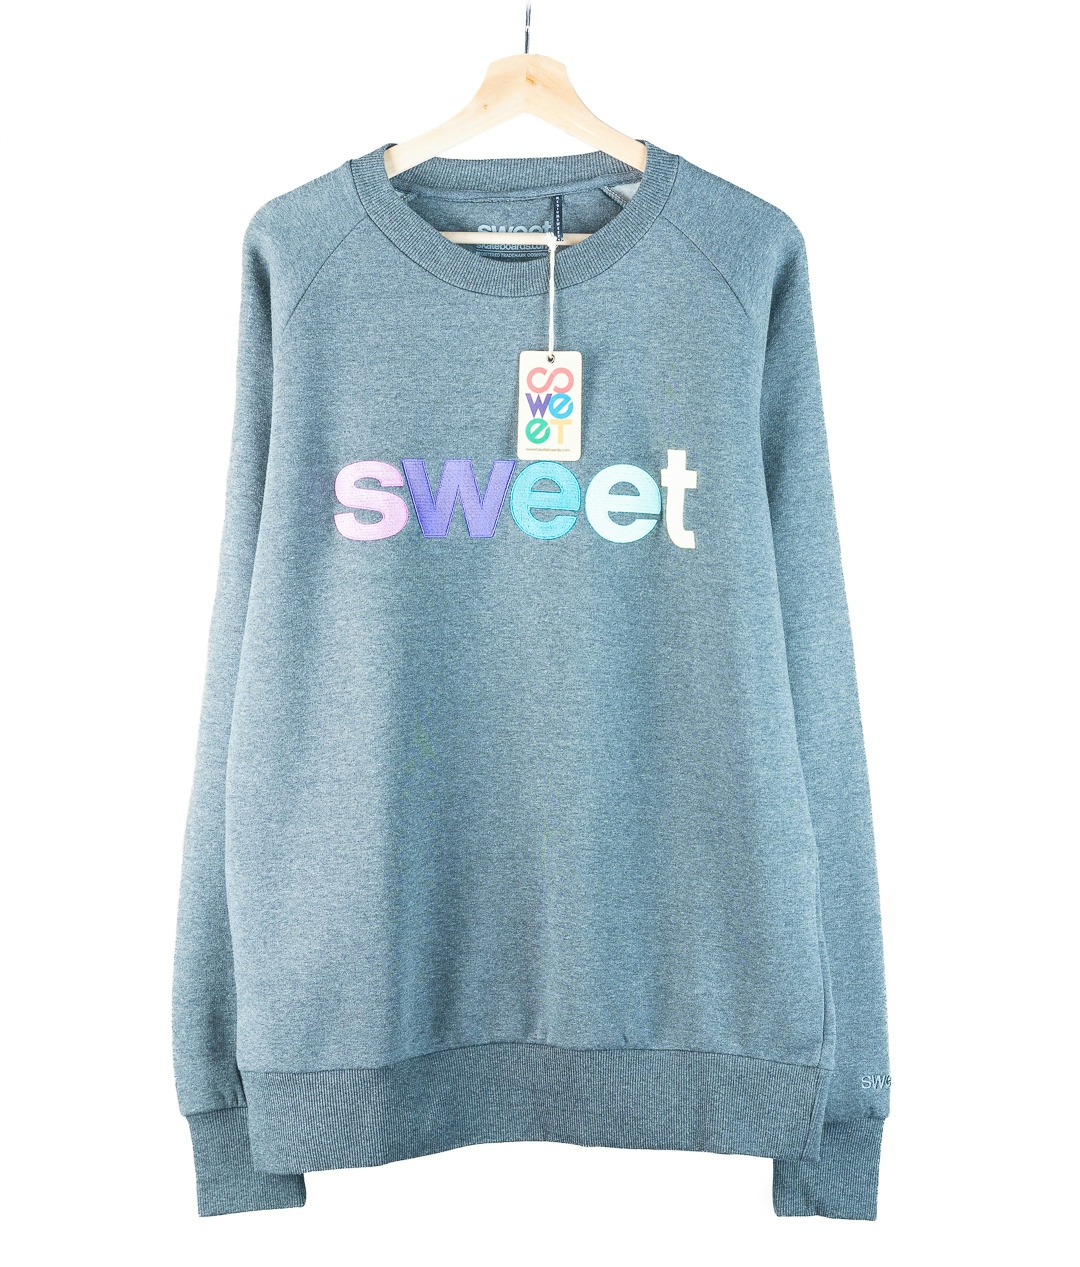 Sweet Sktbs - Steew Sweater